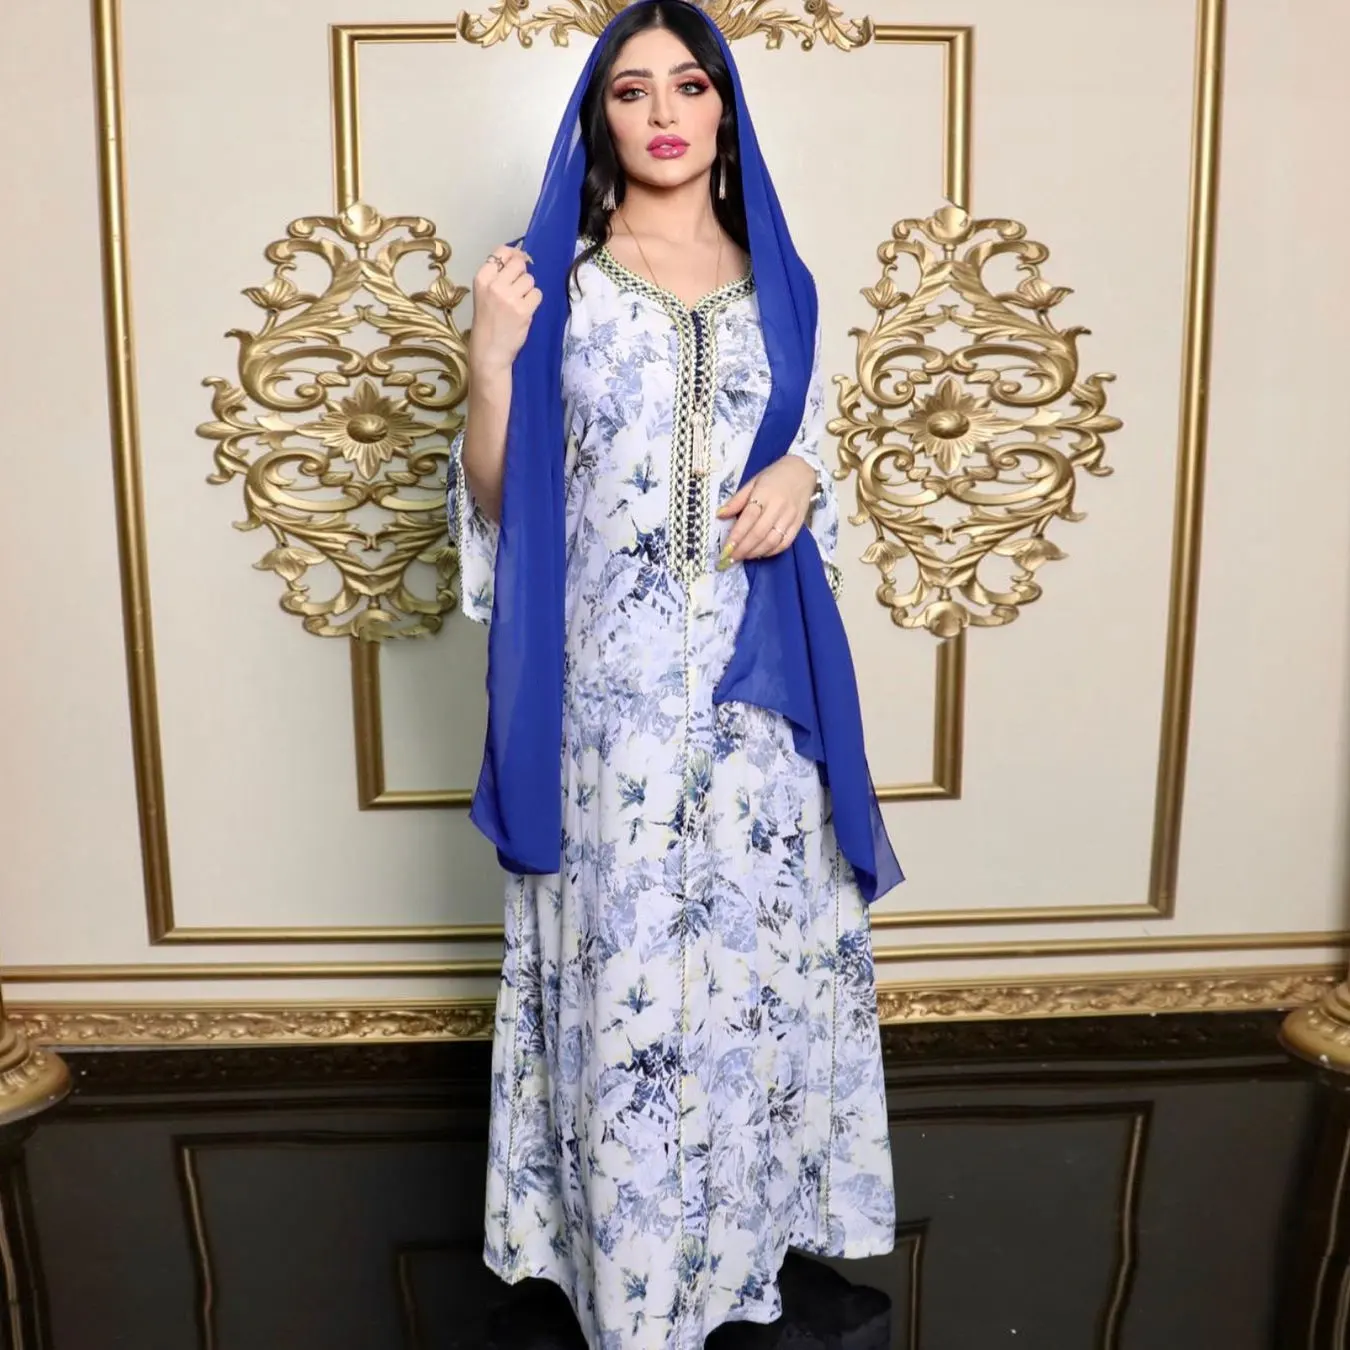 

Middle East Arabic women Muslim clothing lady hijab new blue abaya dress gown